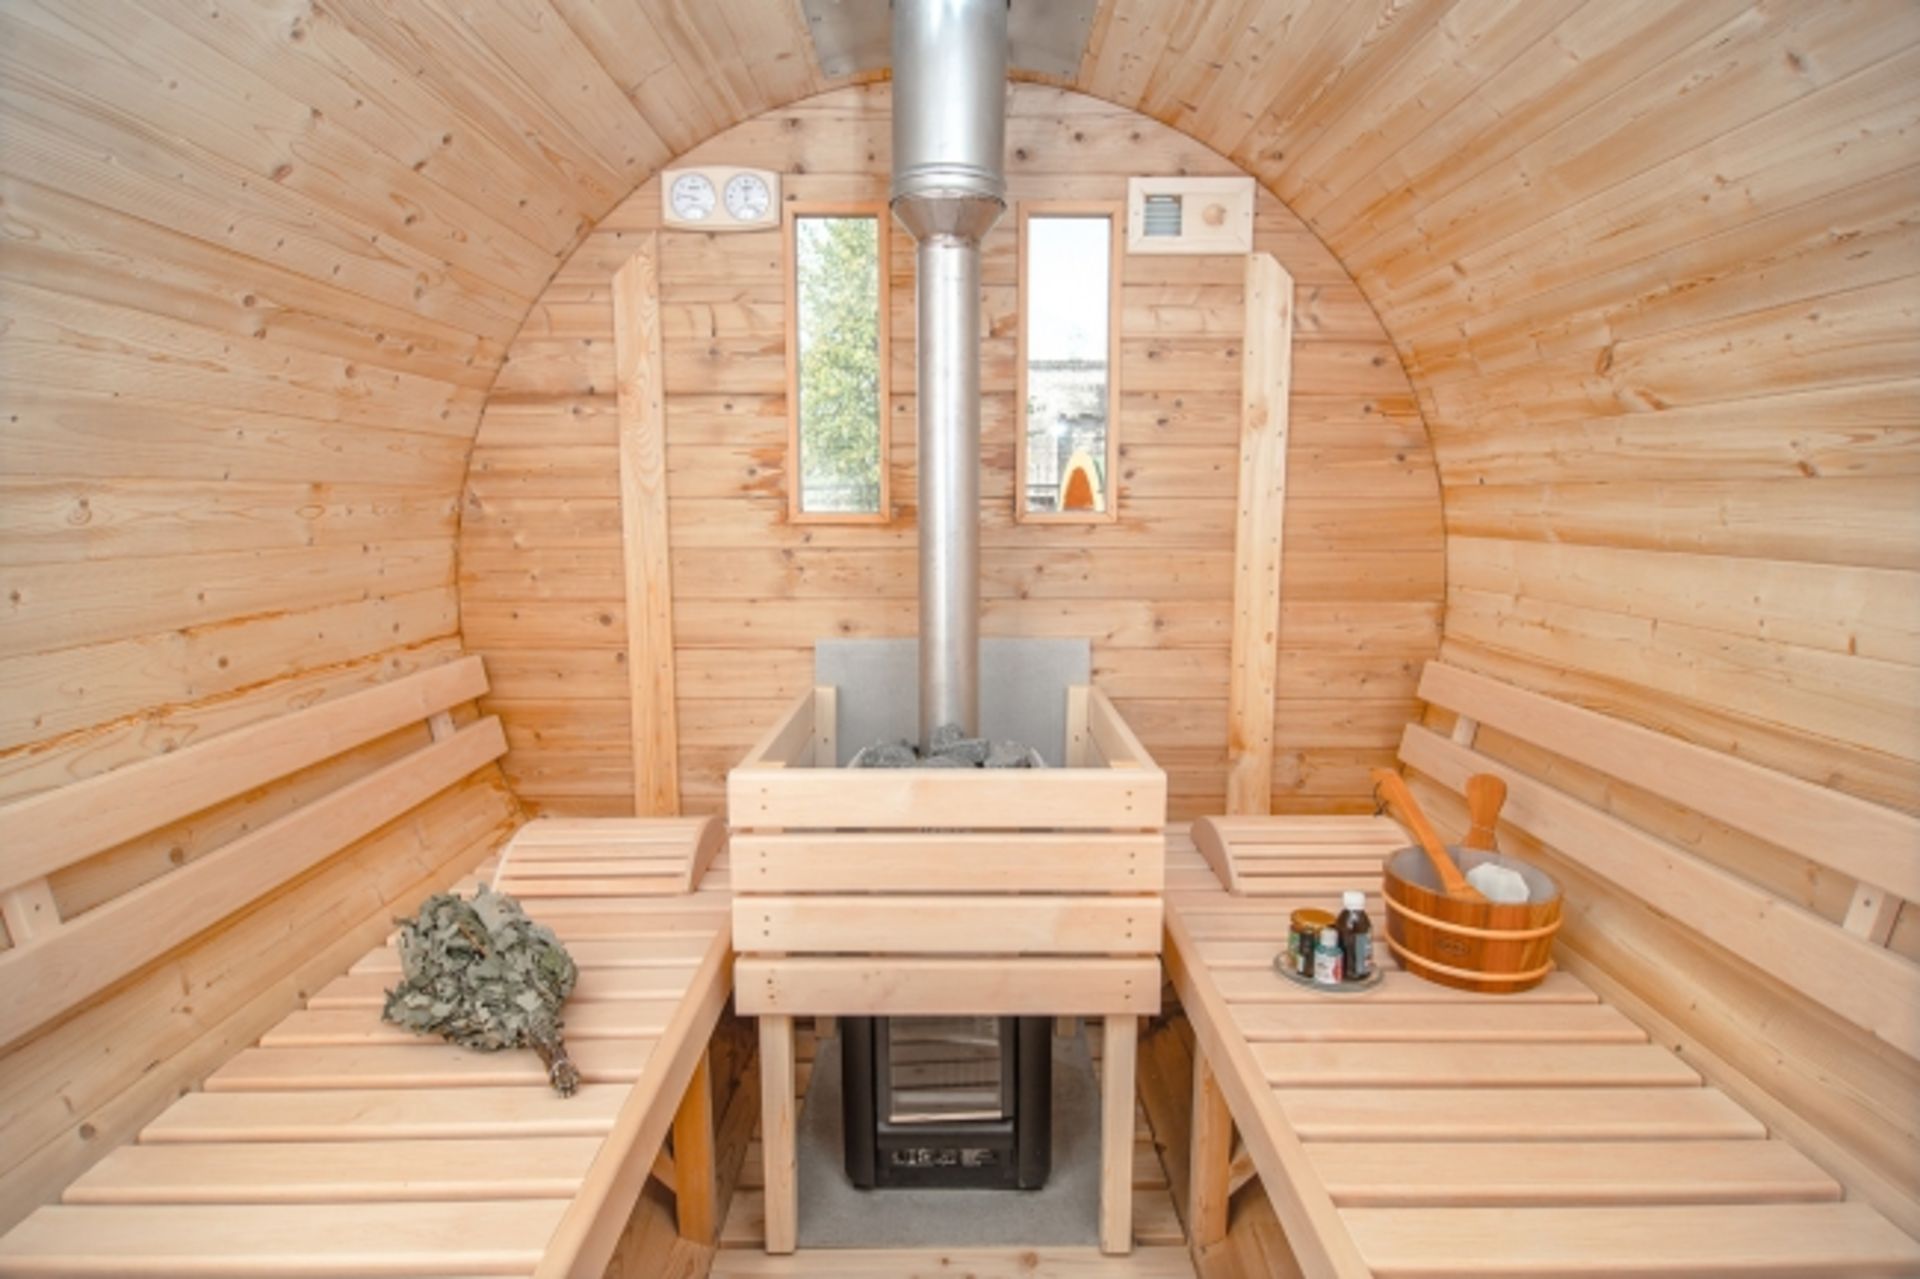 V Brand New 4m Spruce Barrel With 2.2m Sauna (Internal) - 0.6m Terrace - Changing Room & Sauna - Image 3 of 3